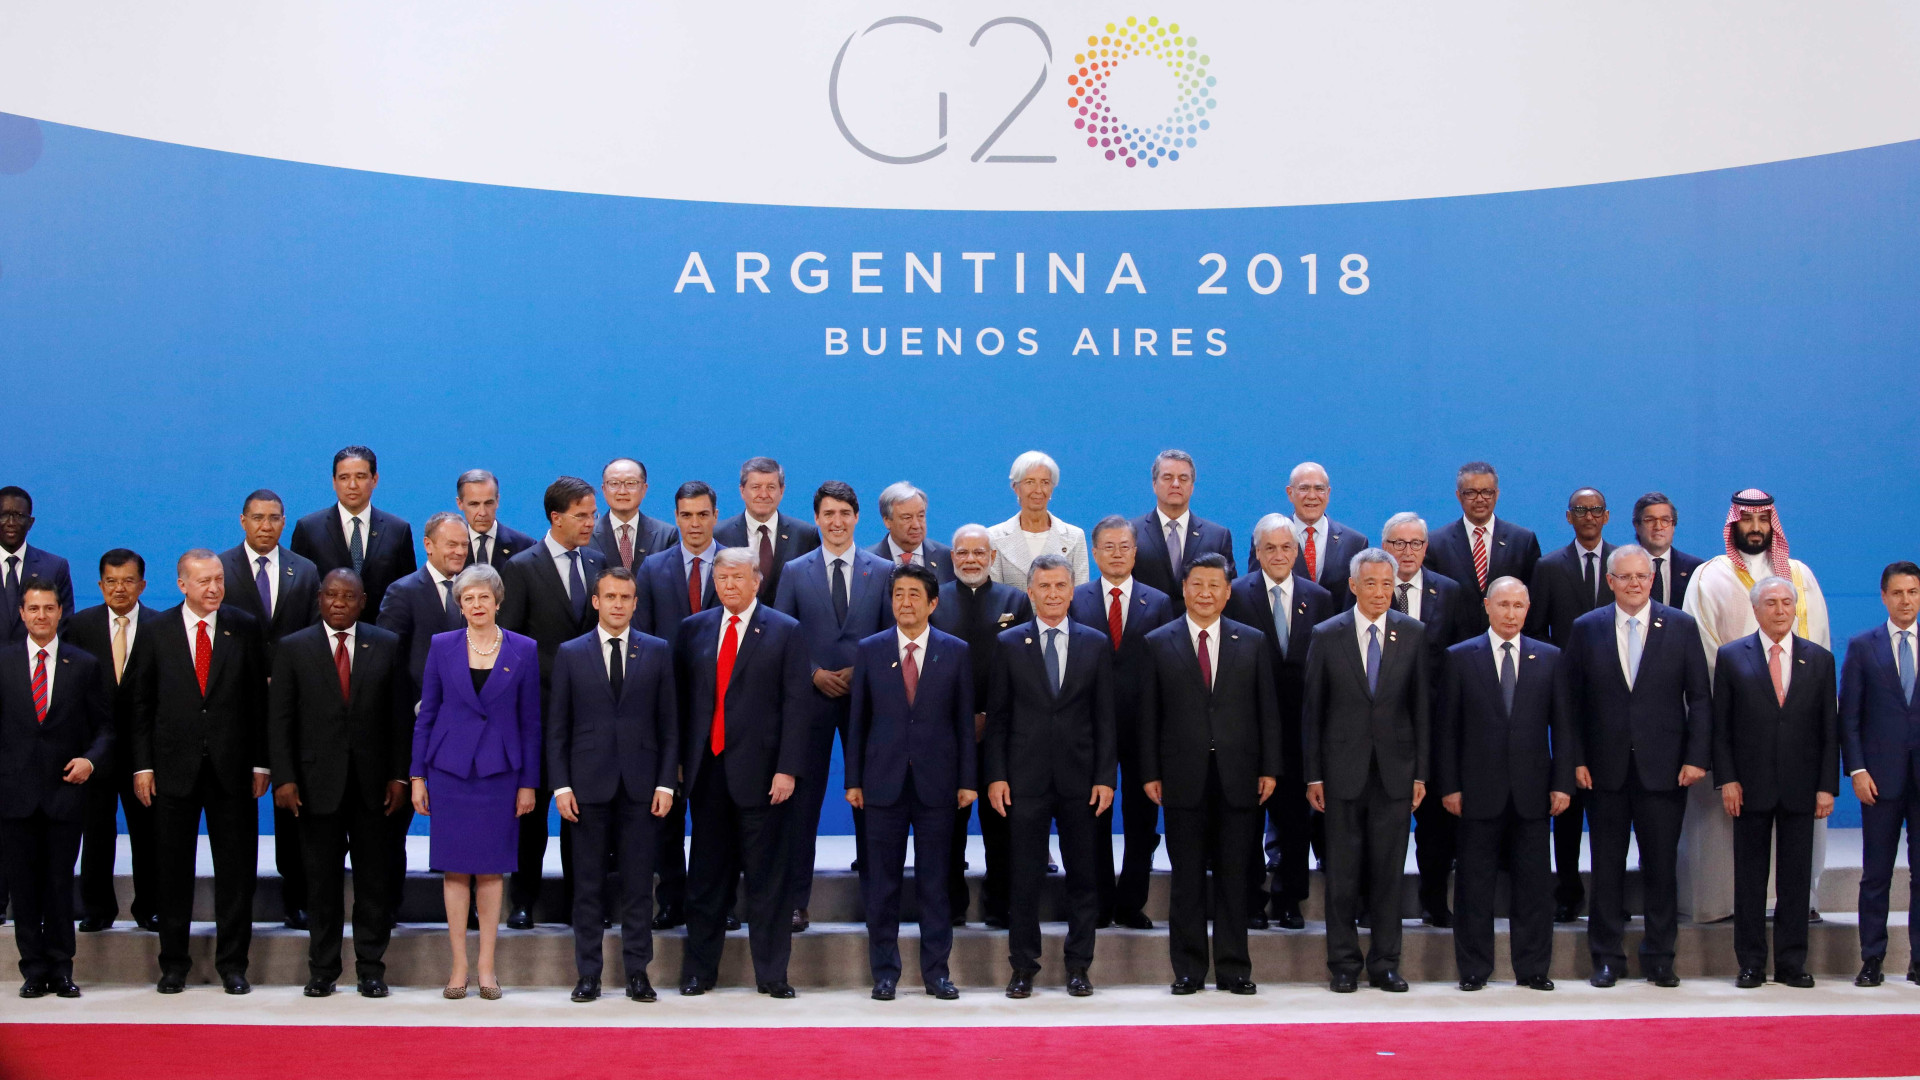 Líderes dos países da cúpula do G20 posam para foto oficial